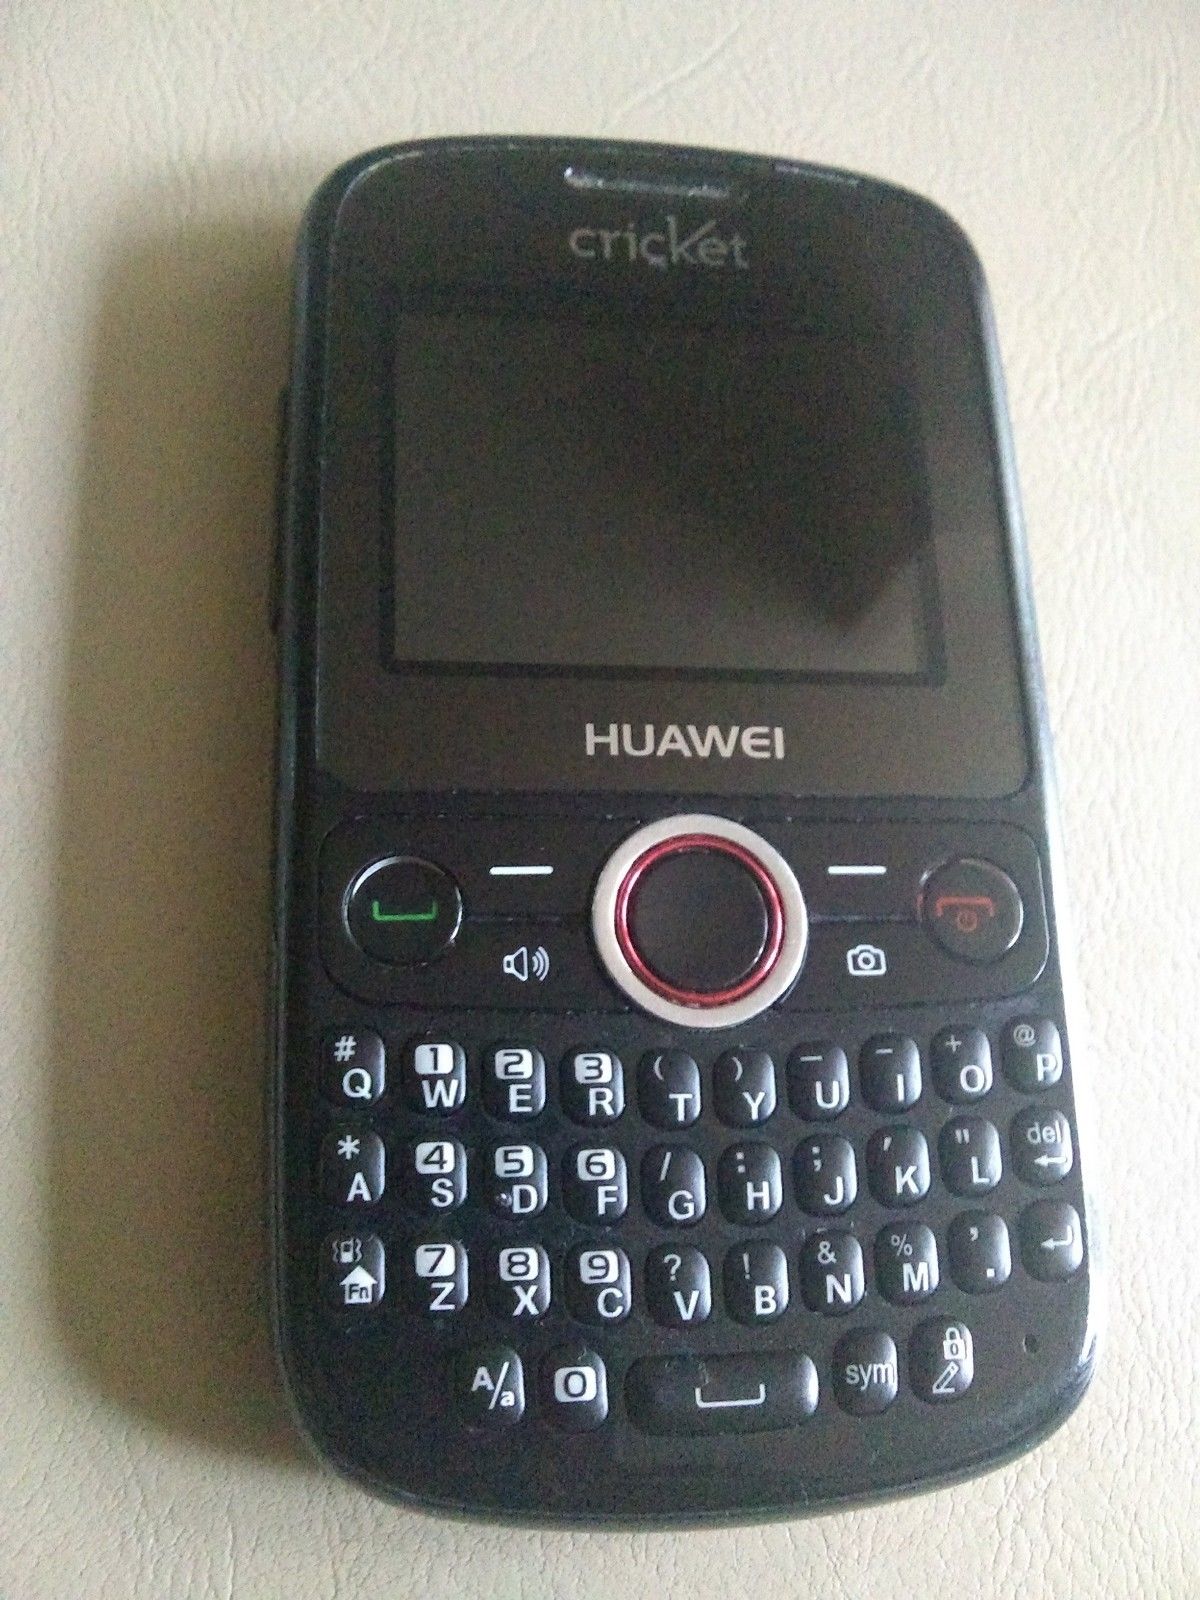 Huawei Pillar - Black (Cricket) Cellular Phone | eBay